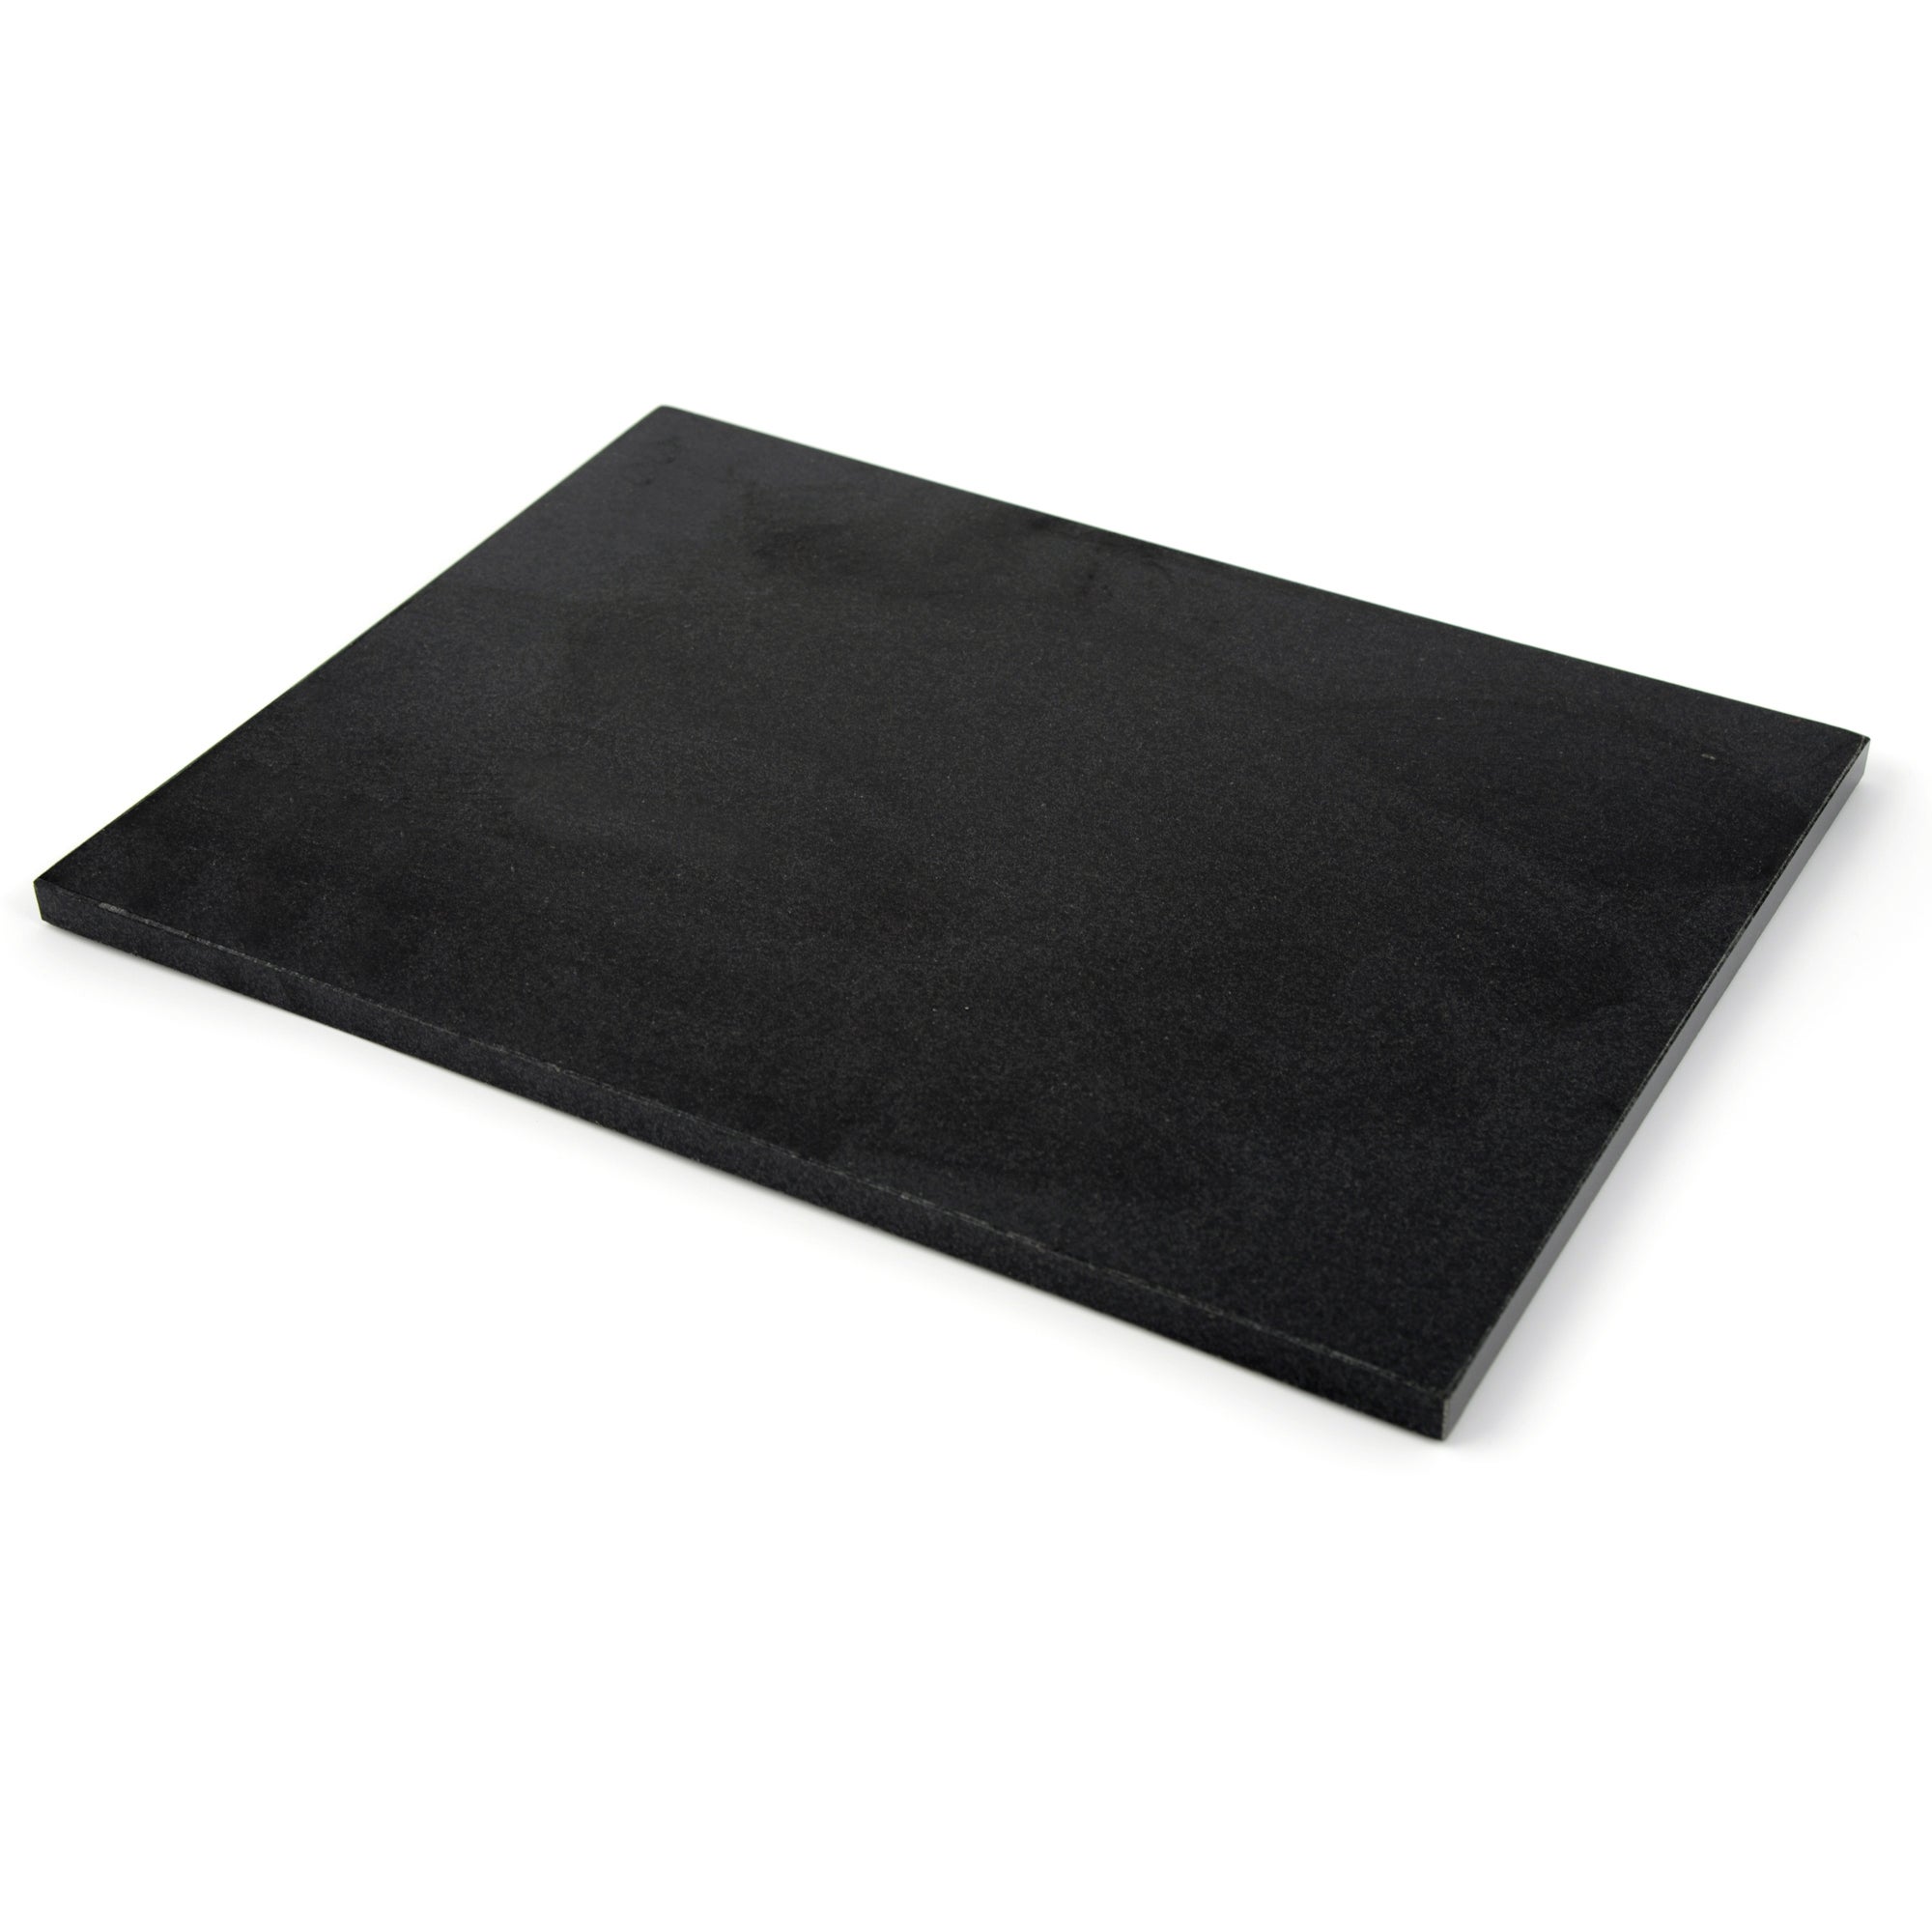 Black Granite Work Top Surface Protector | Dunelm